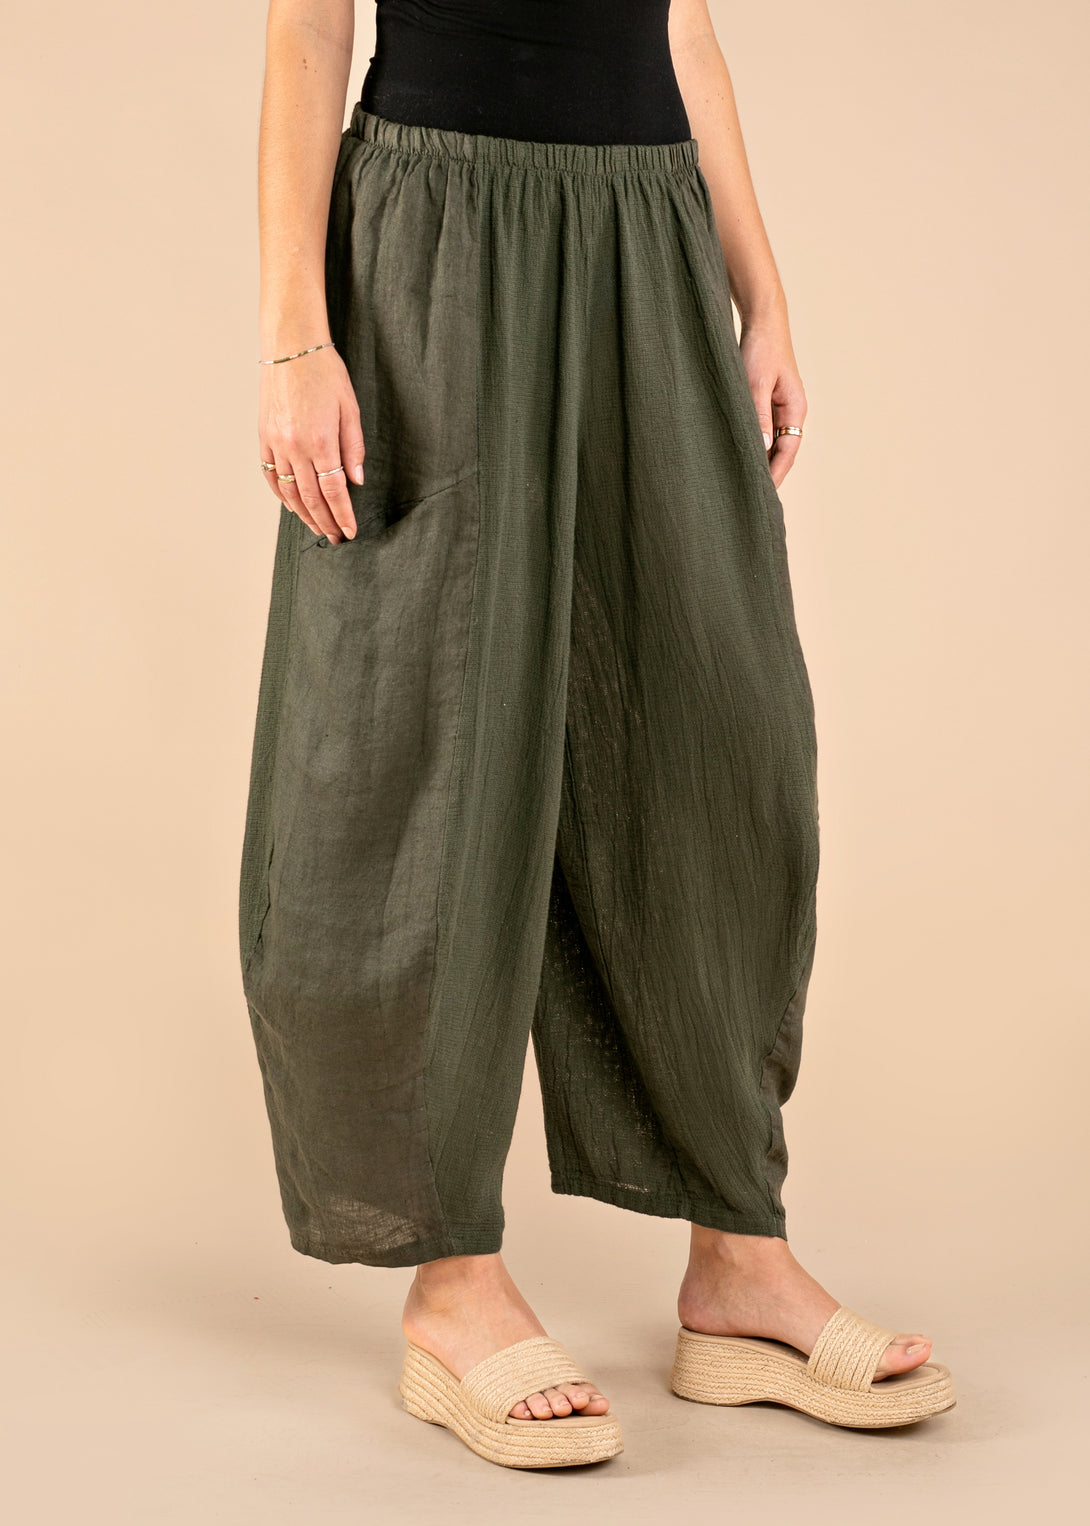 Benadita Linen Blend Pants in Khaki - Imagine Fashion